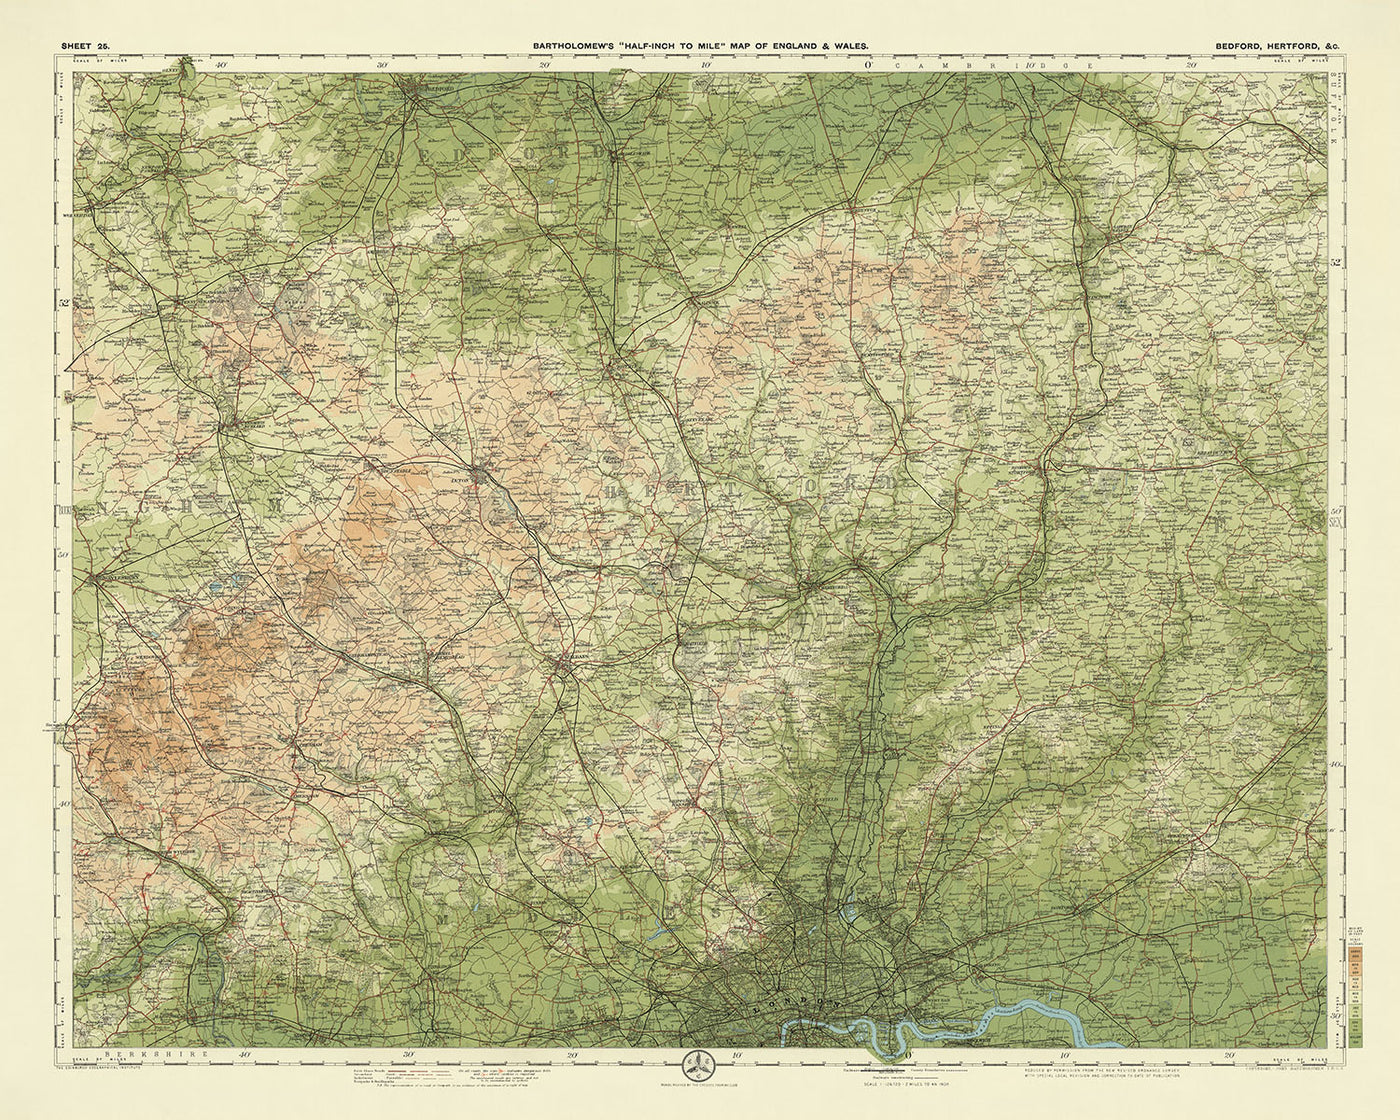 Old OS Map of Bedfordshire & Hertfordshire by Bartholomew, 1901: Luton, Chiltern Hills, London, Hemel Hempstead, St Albans